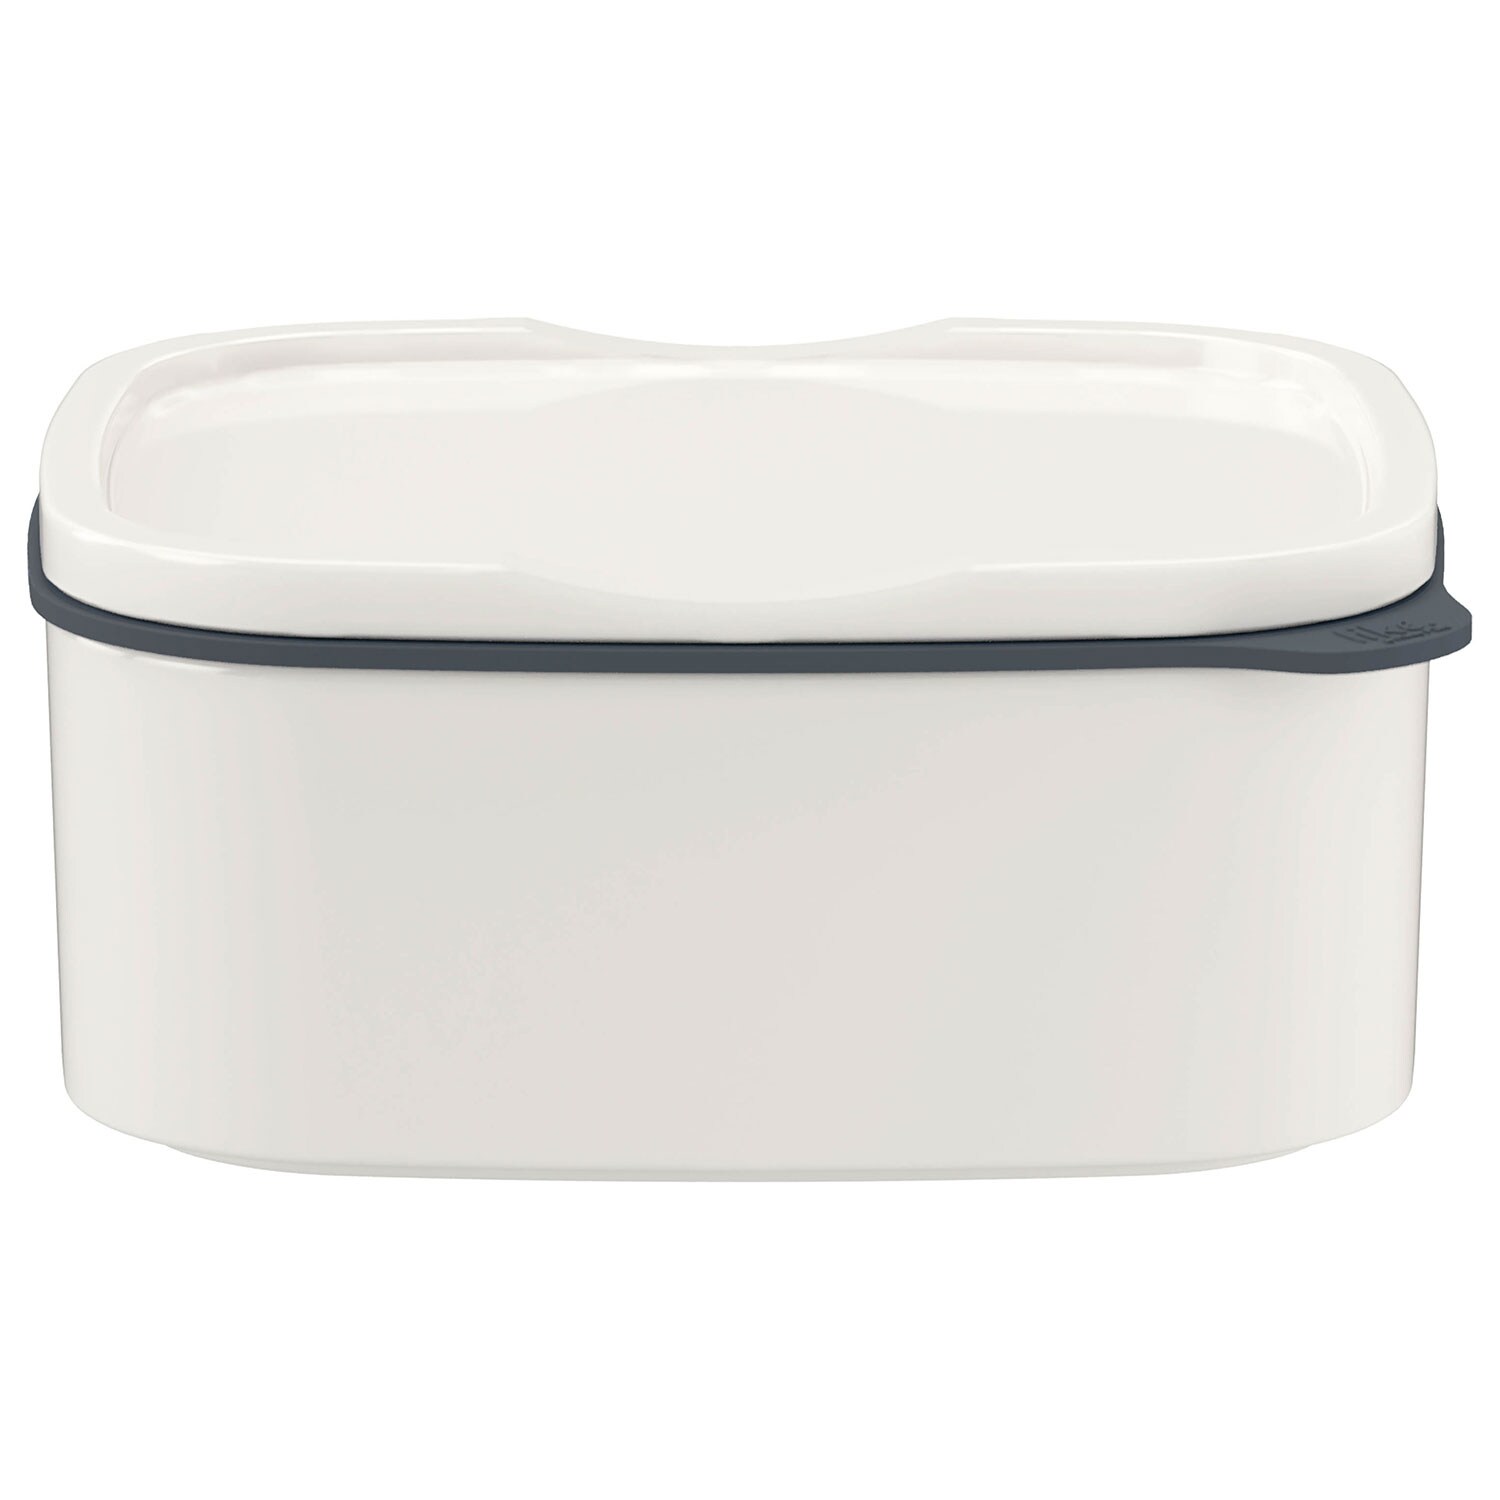 https://royaldesign.com/image/2/villeroy-boch-togotostay-lunch-box-white-13x10x6-cm-0